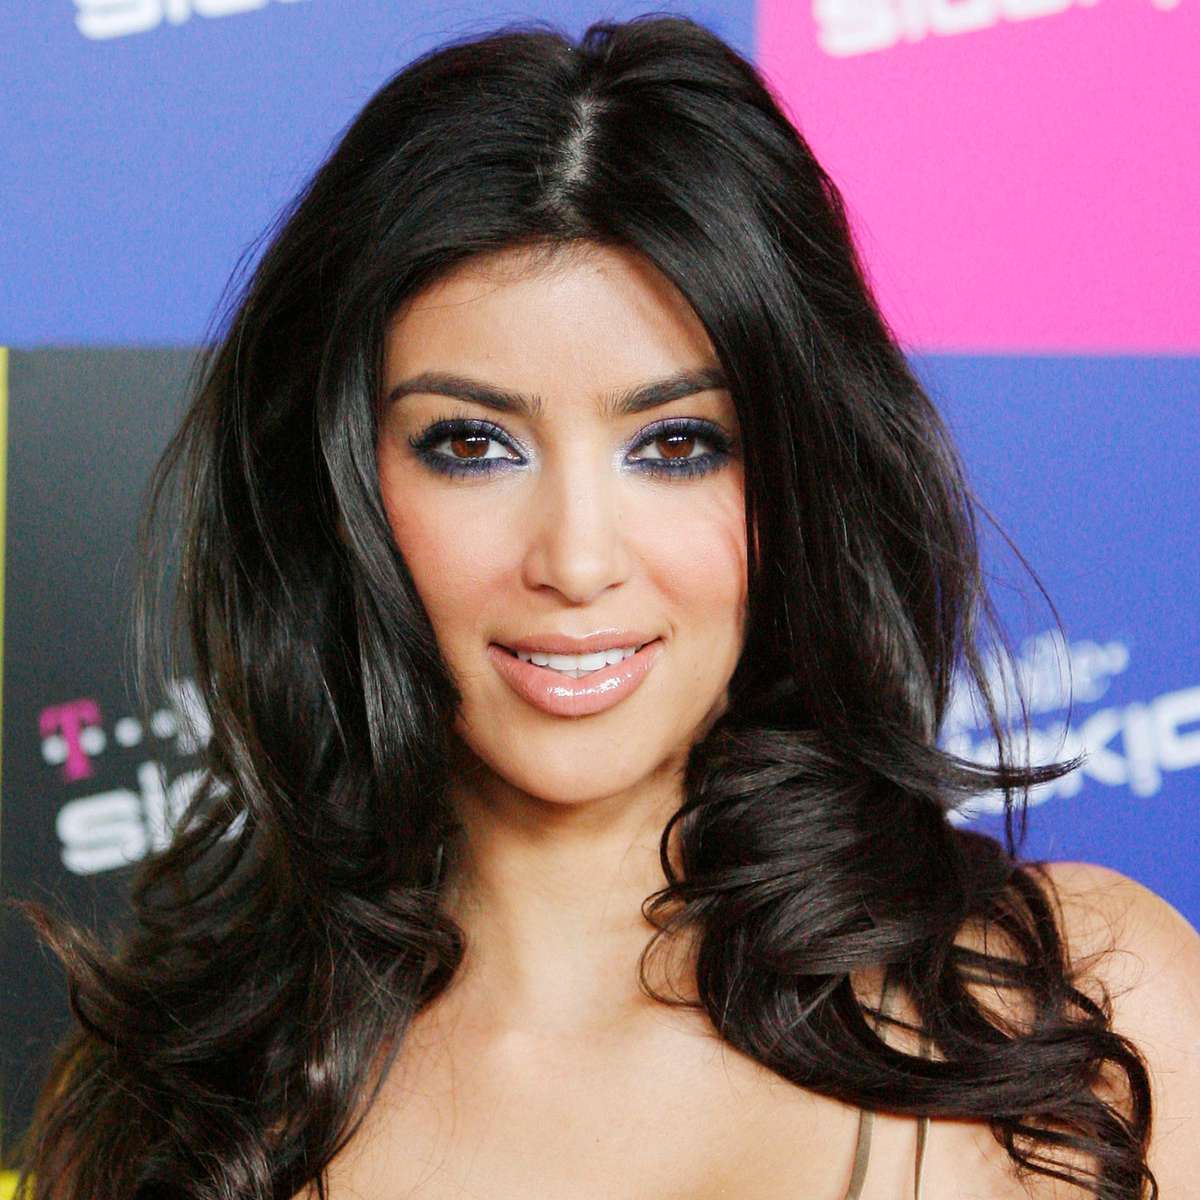 Kim Kardashian arrives to the T-Mobile Sidekick iD launch